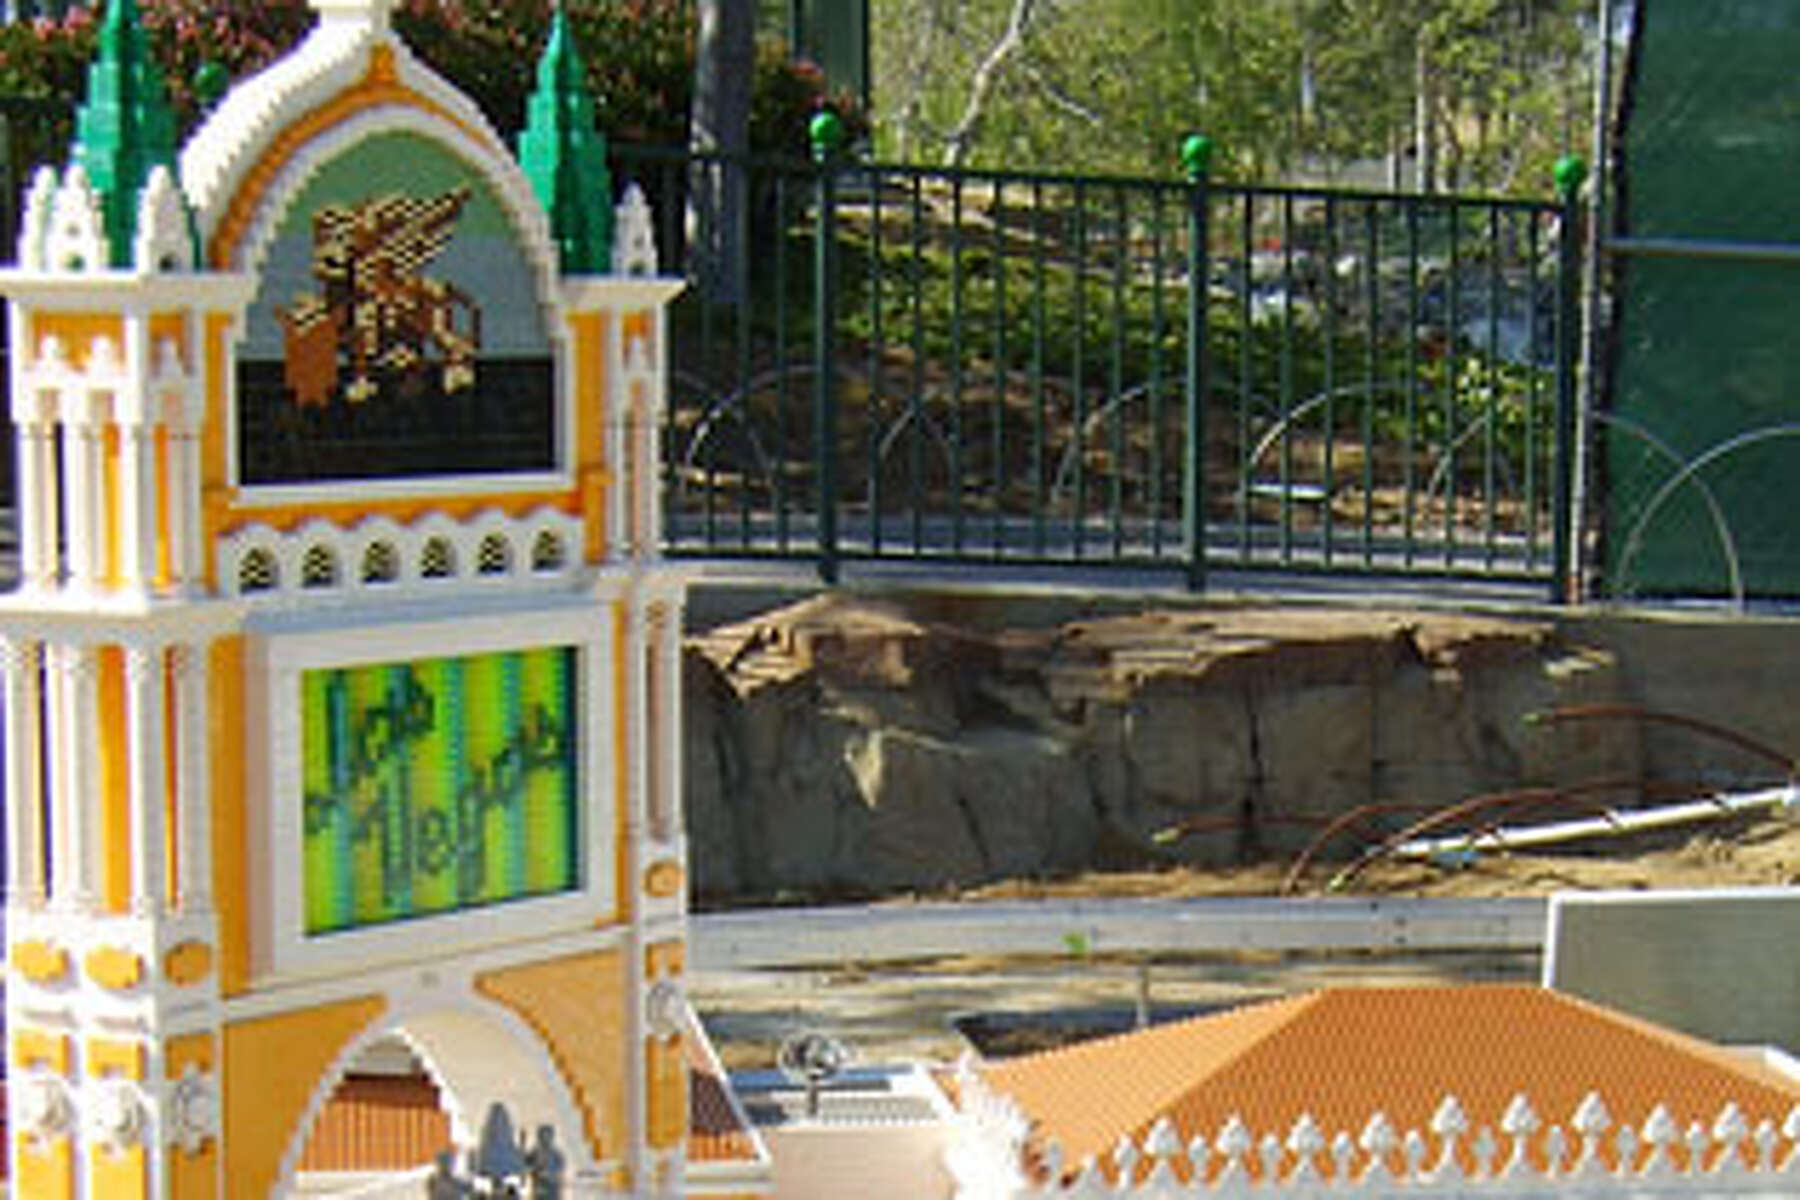 Legoland, California - The Las Vegas Strip re-created from legos